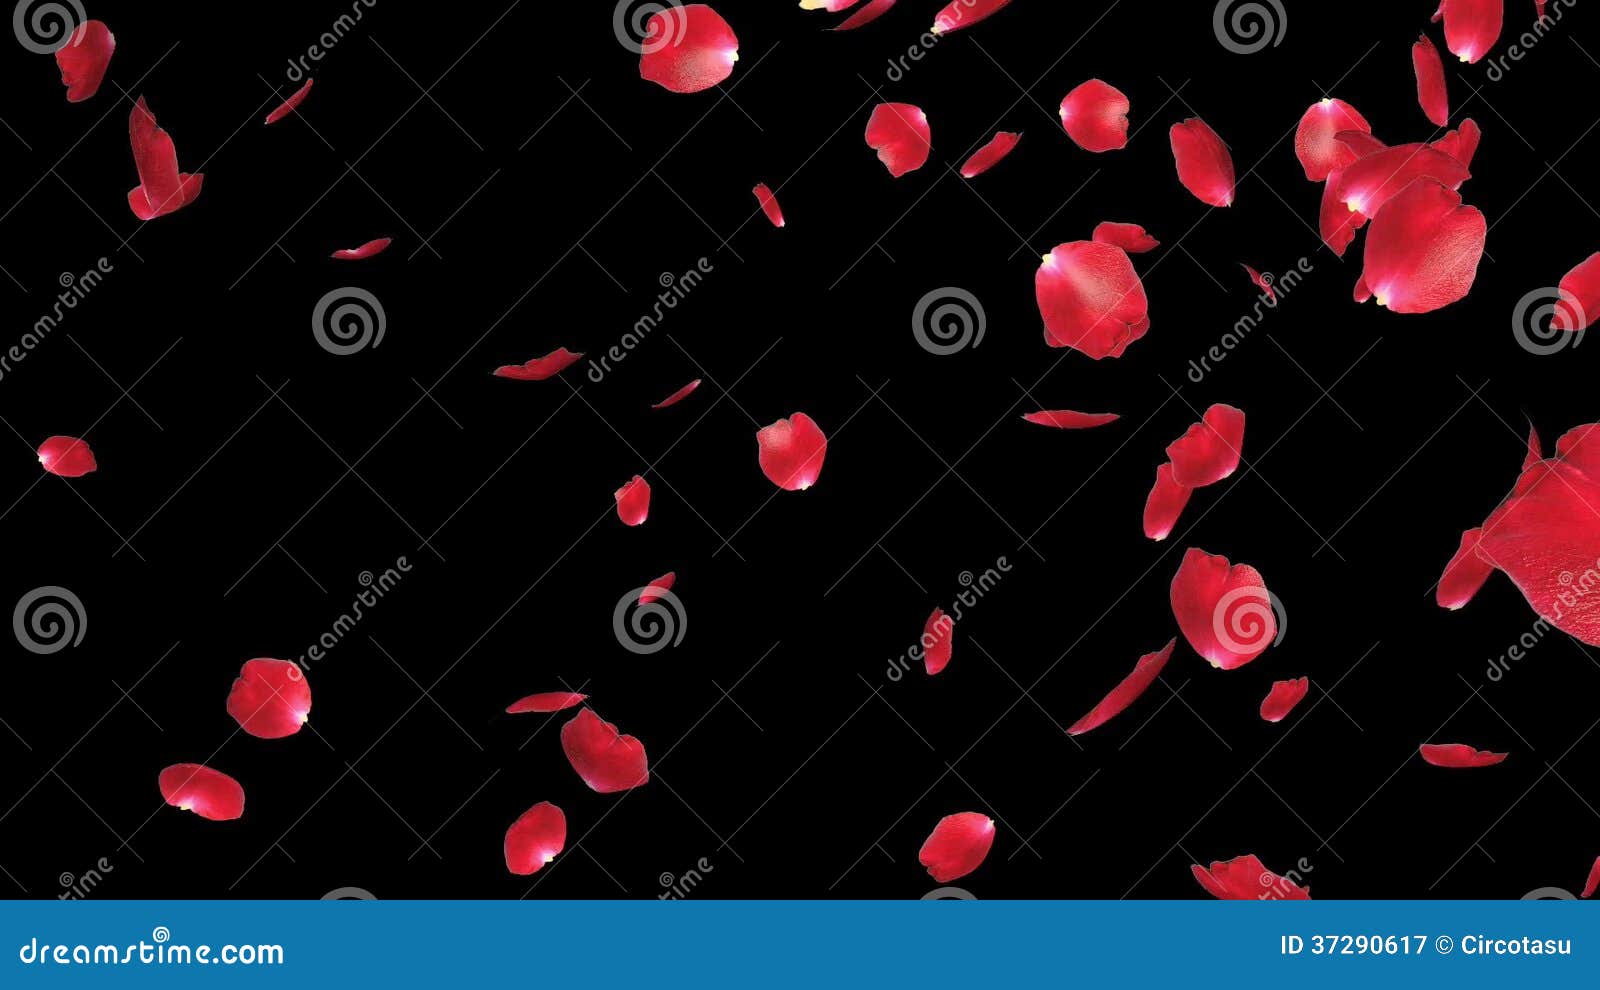 Falling Rose Petals on black background, Stock Video